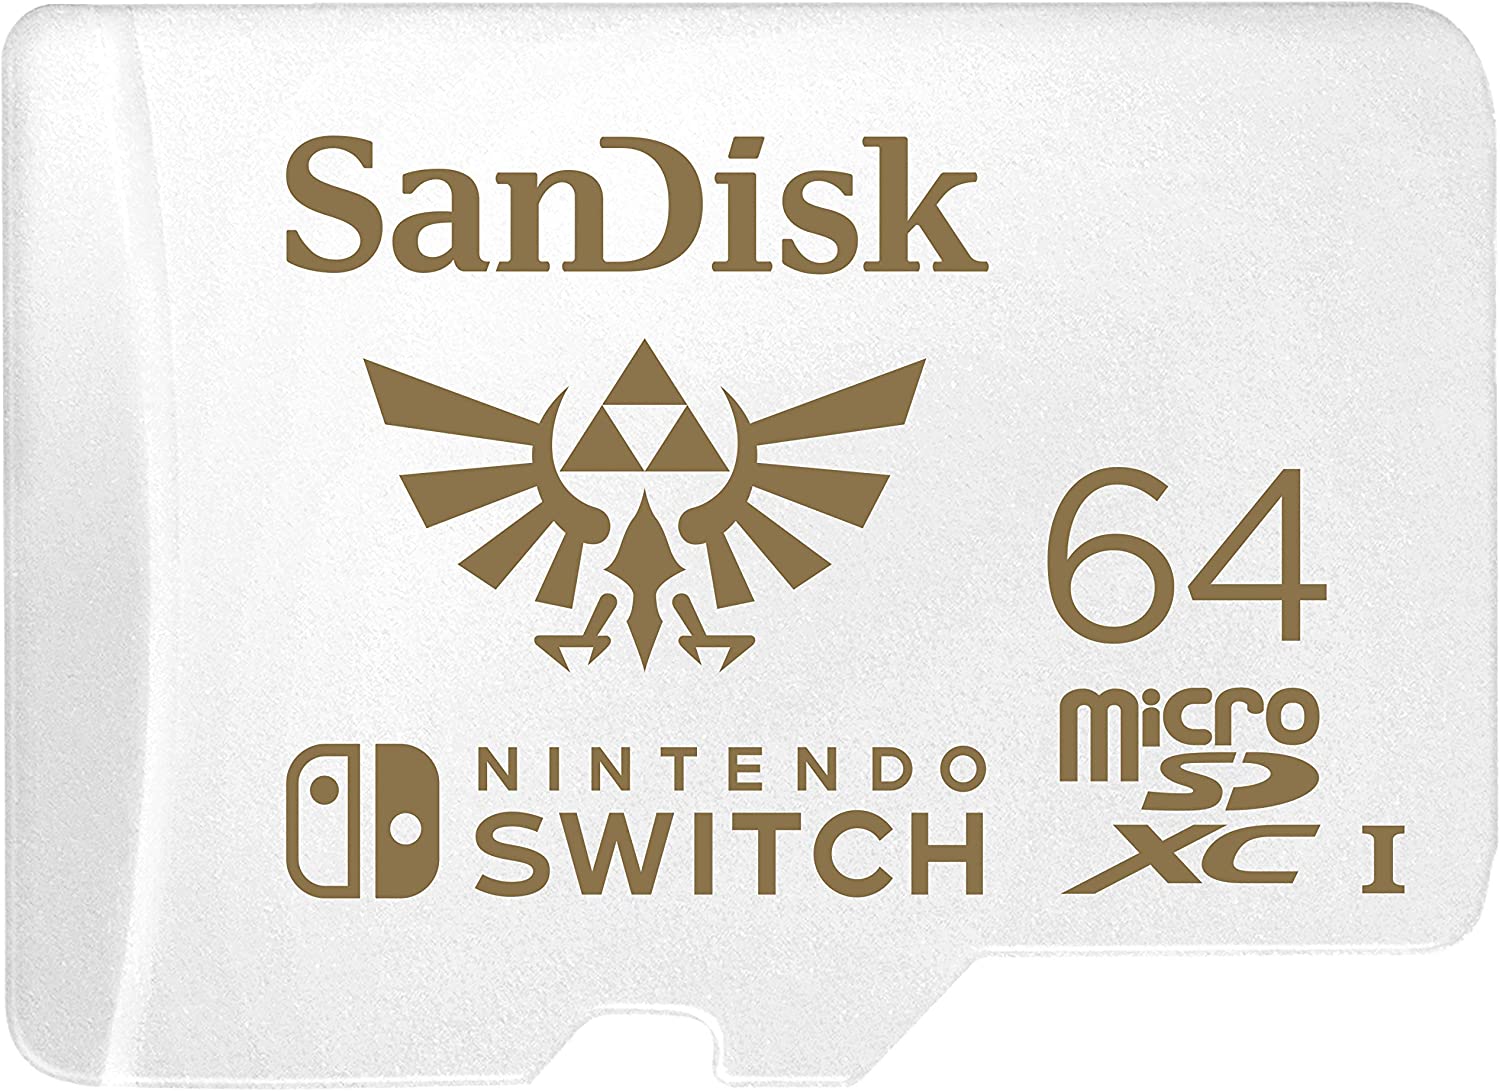 64GB SanDisk microSDXC UHS-I Card for Nintendo Switch (Legend of Zelda Style) $8.99 + Free Shipping